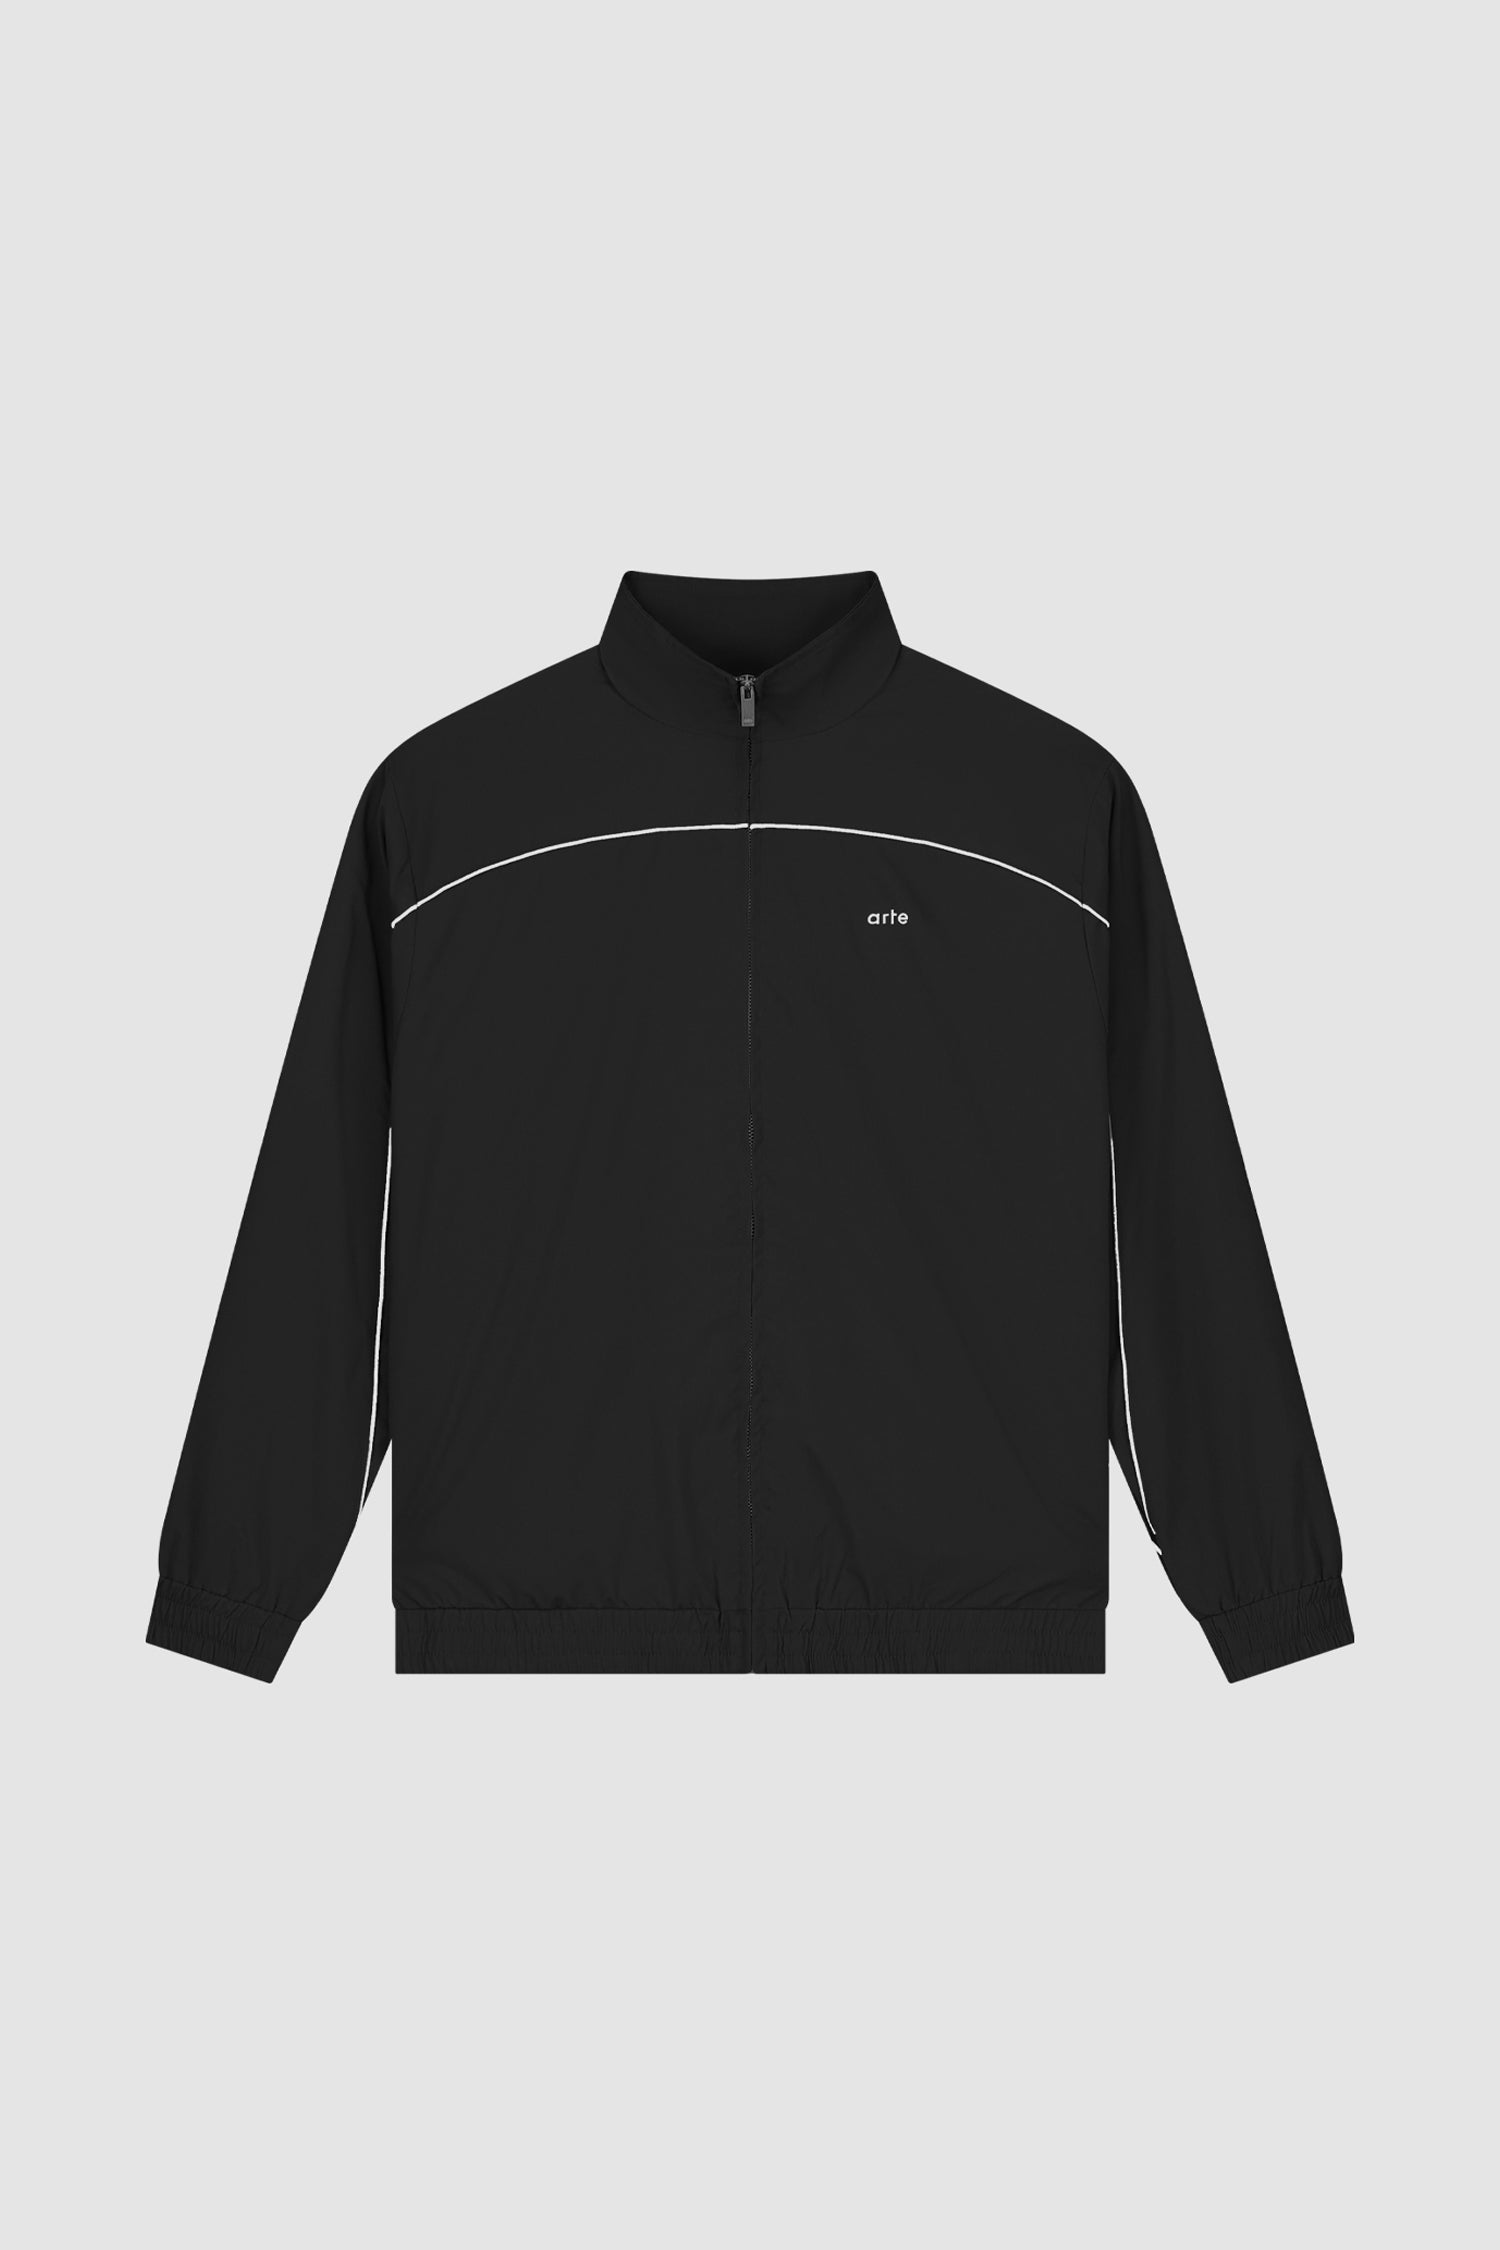 Jordan AW23 Jacket - Black/Grey